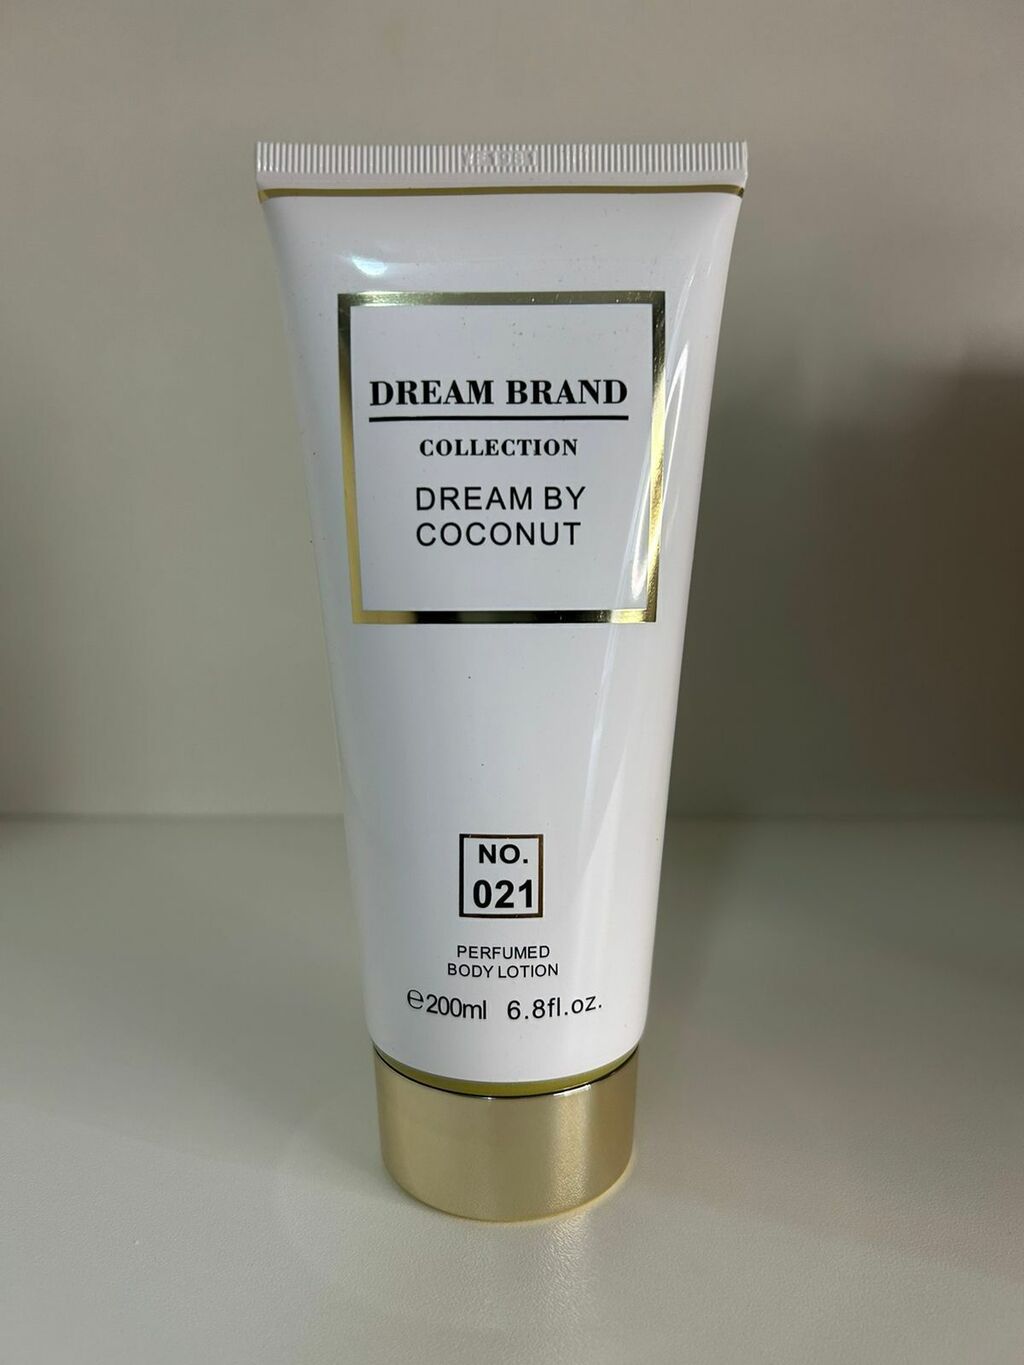 Dream Brand Collection 021 Dream By Coconut 200ml Creme